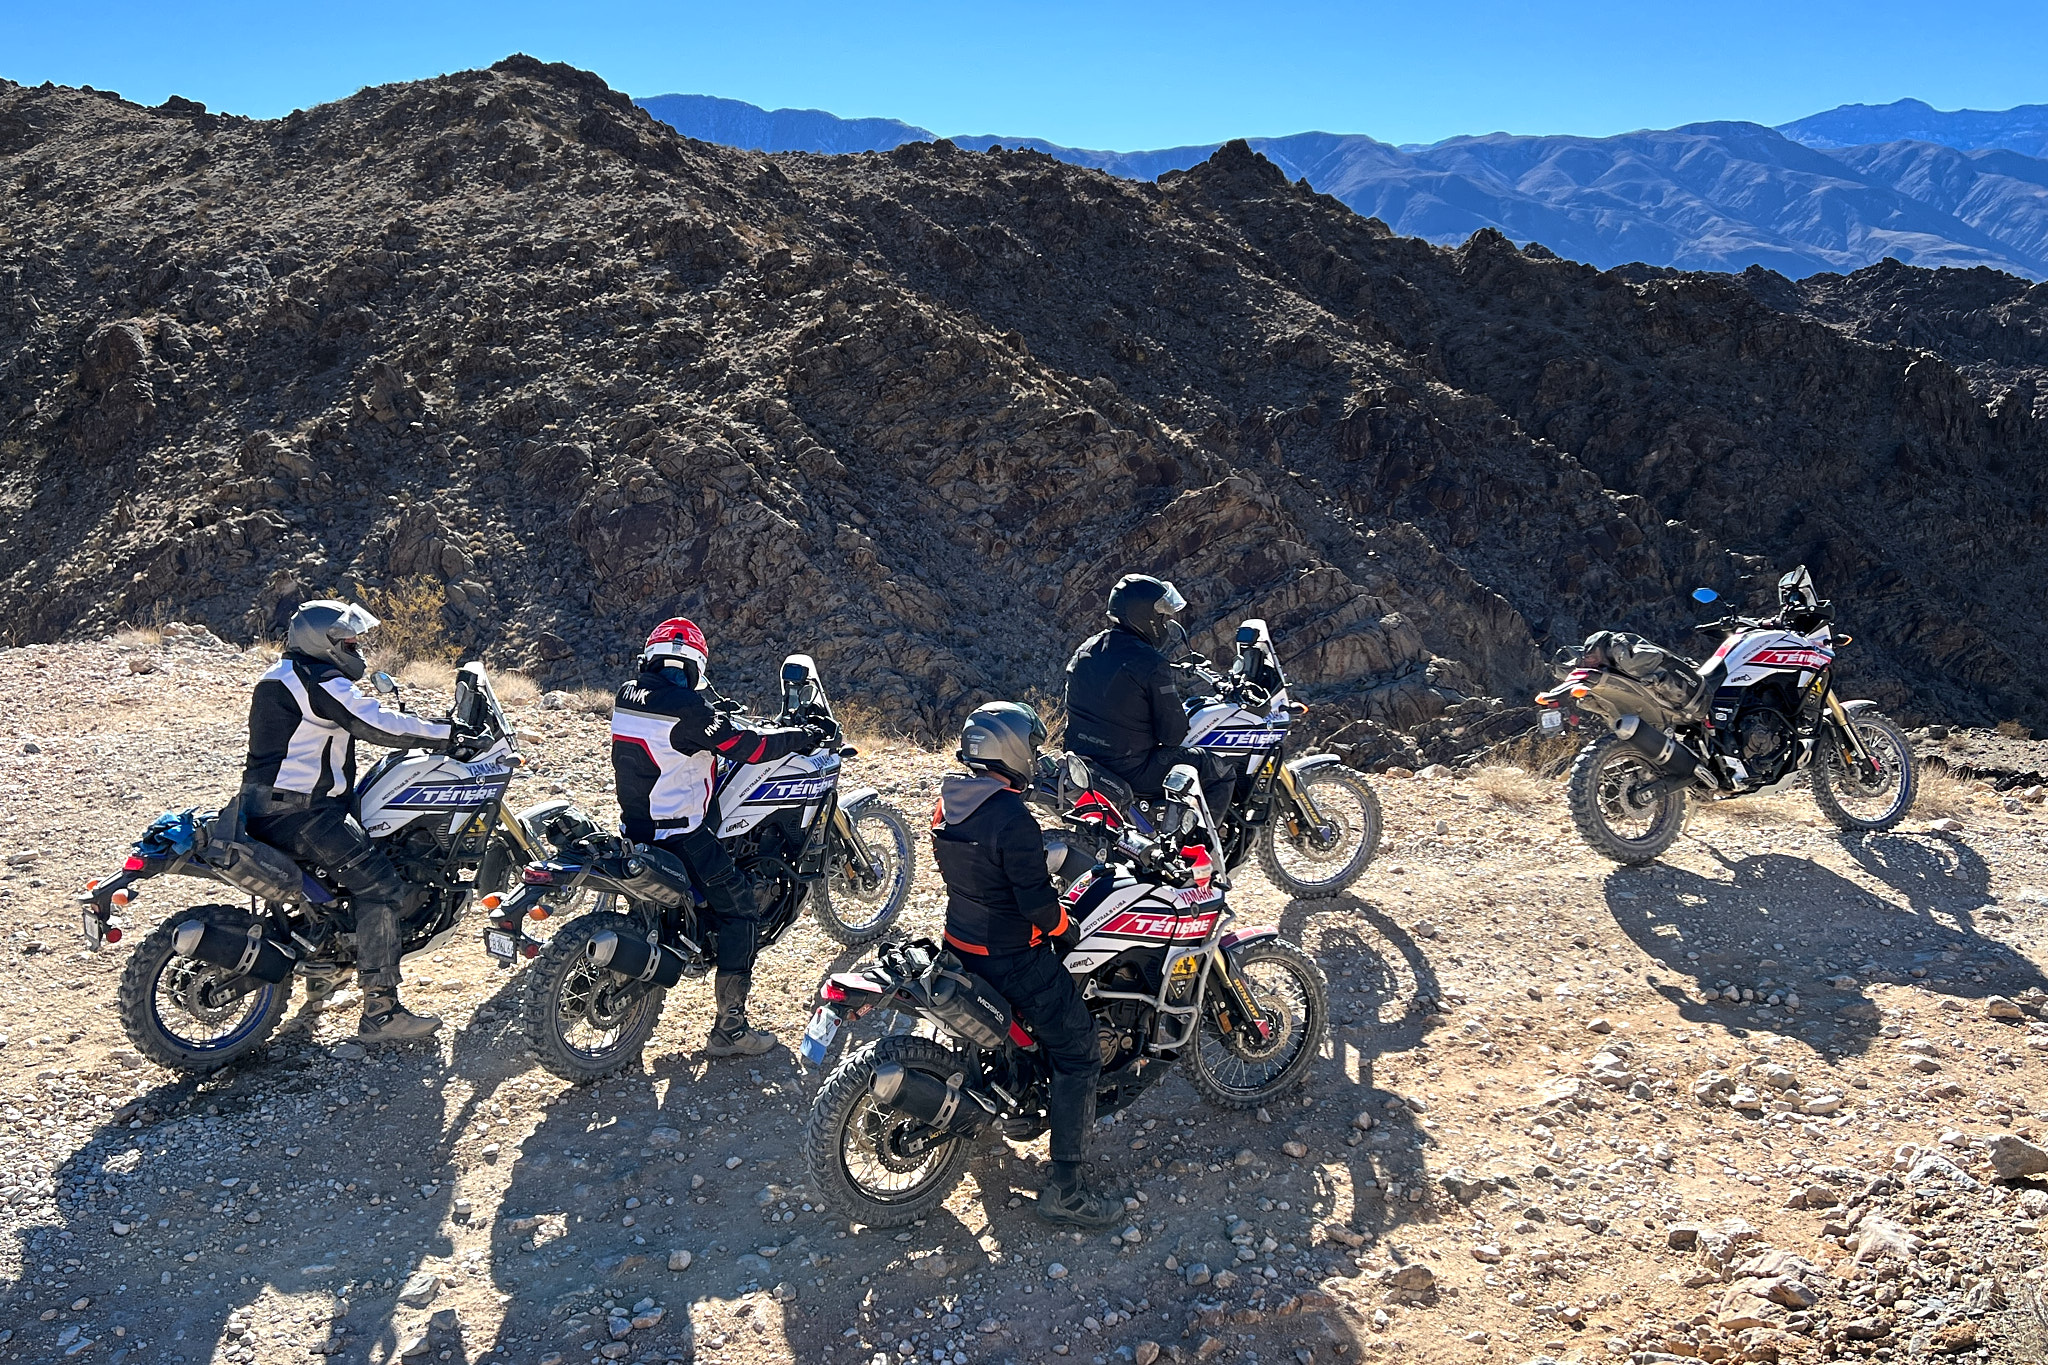 California and Las Vegas Motorcycle Tour